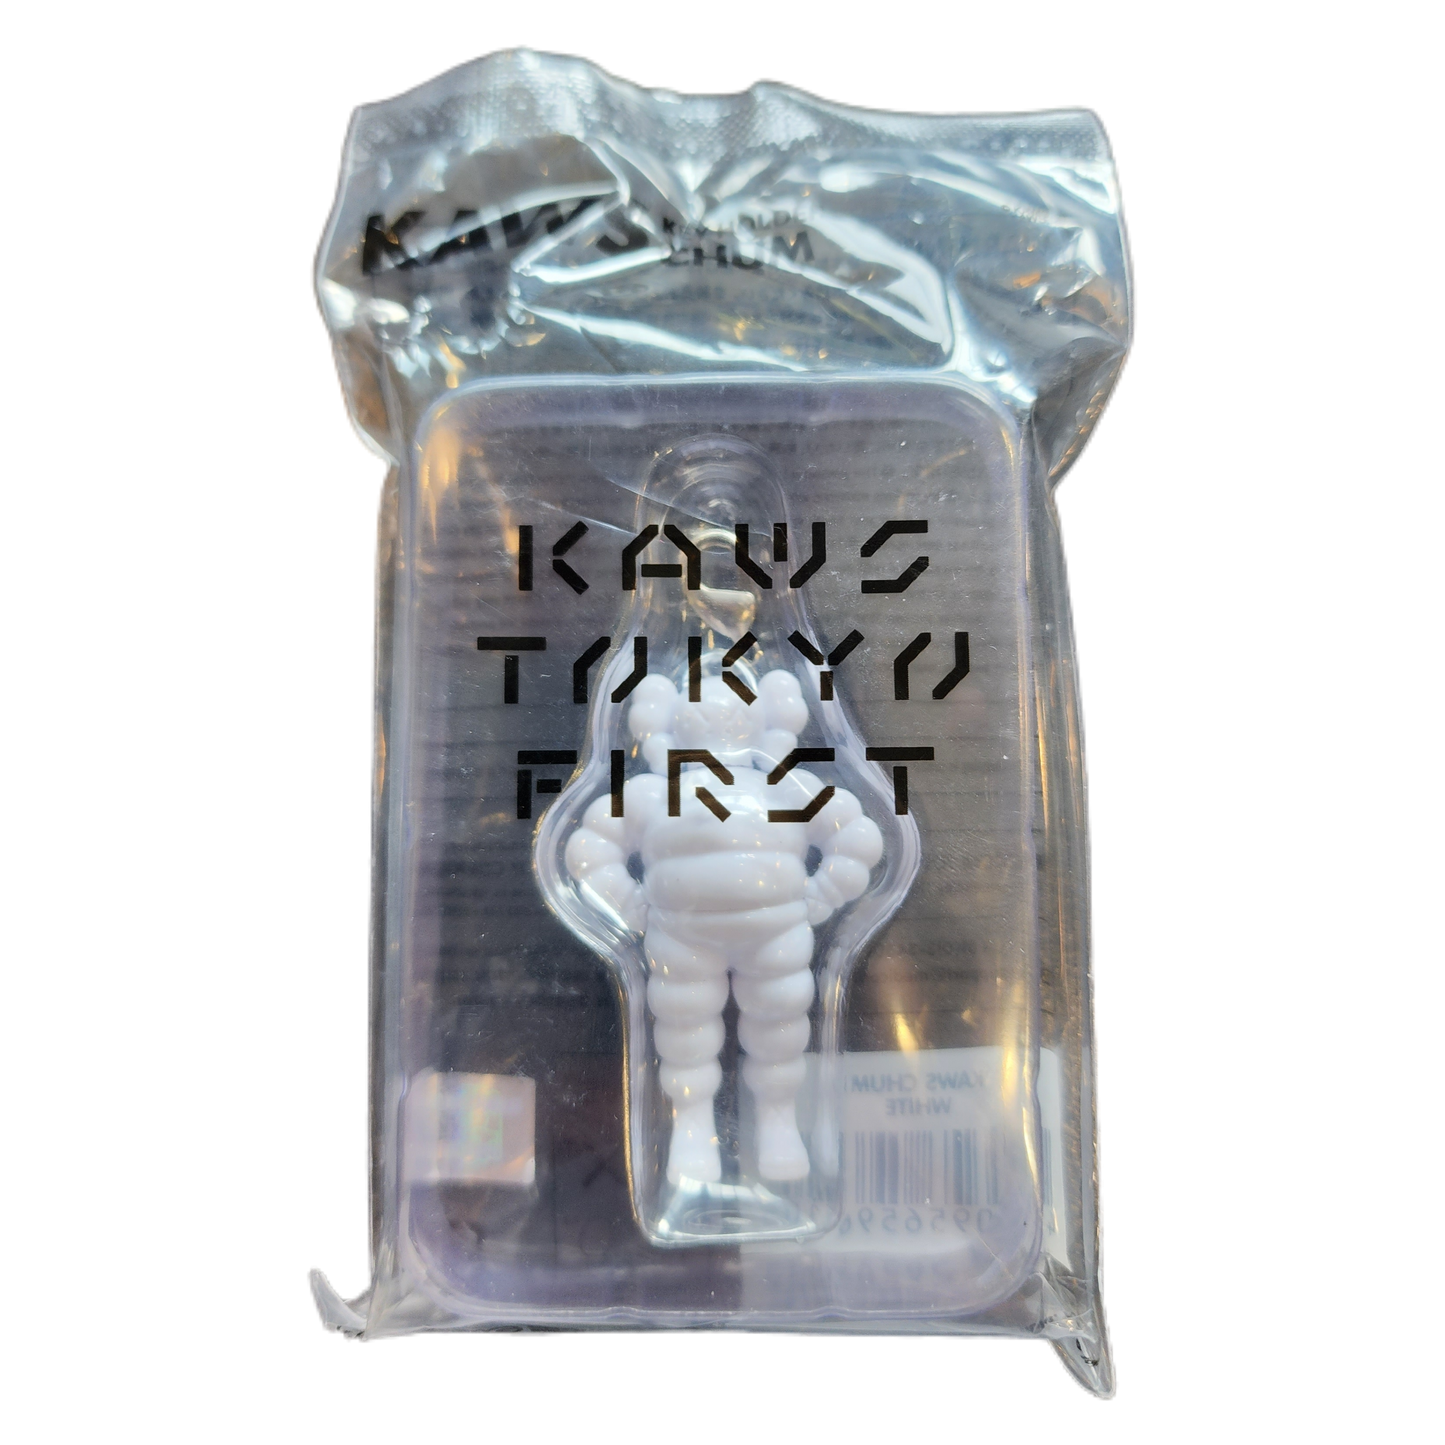 Kaws - "Tokyo First Chum" - Keychain